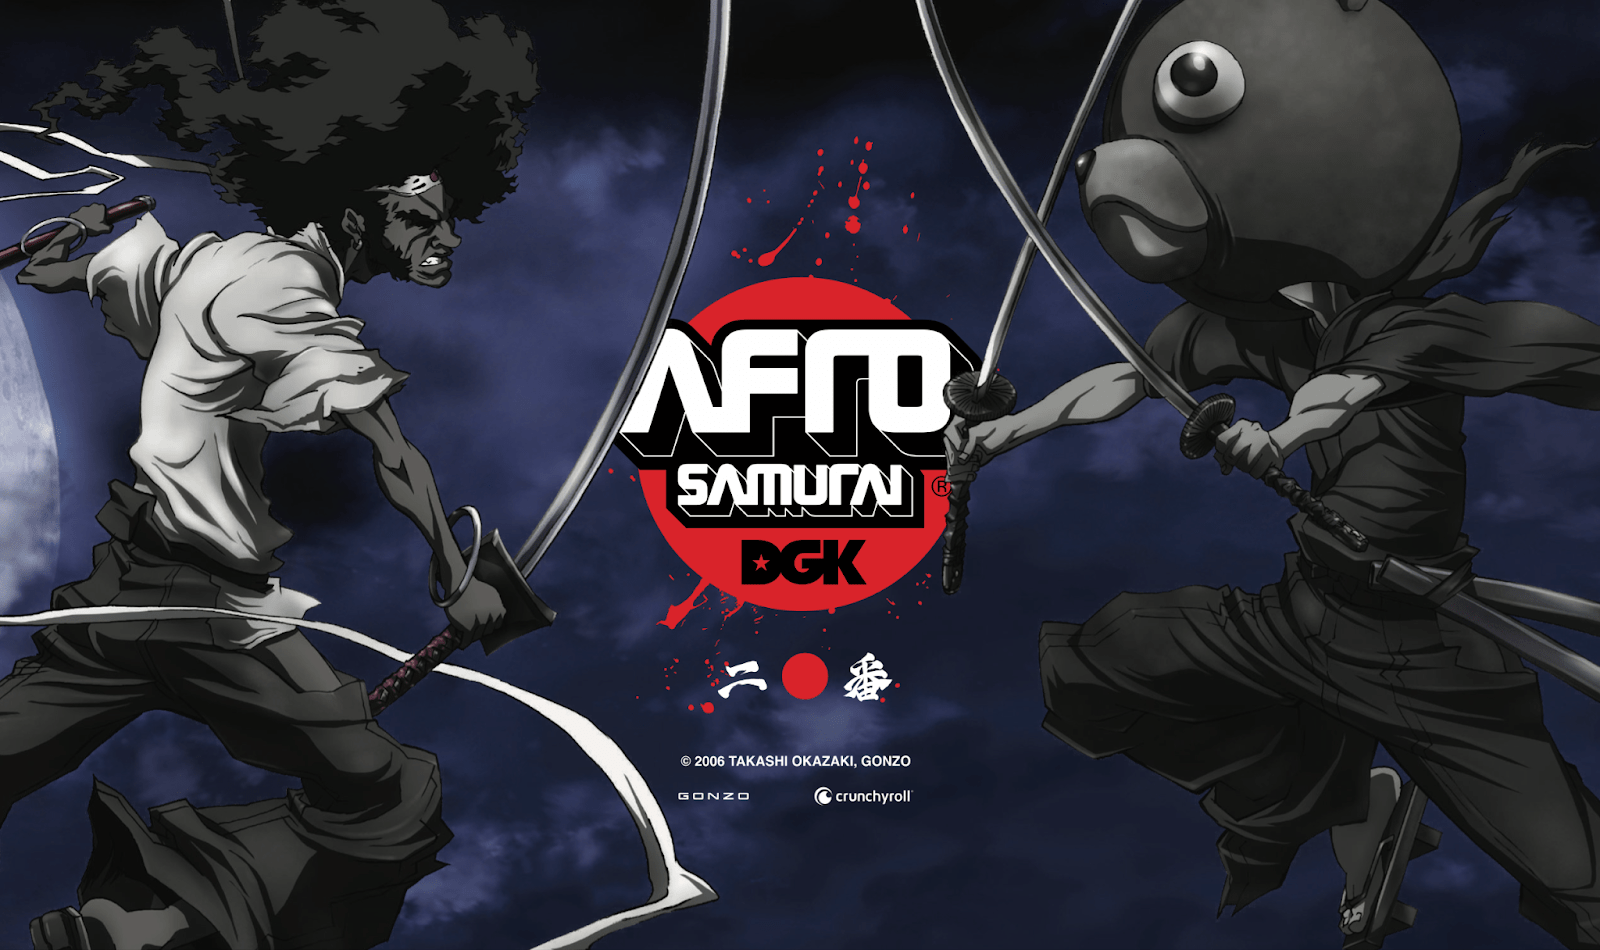 DGK x Afro Samurai collaboration